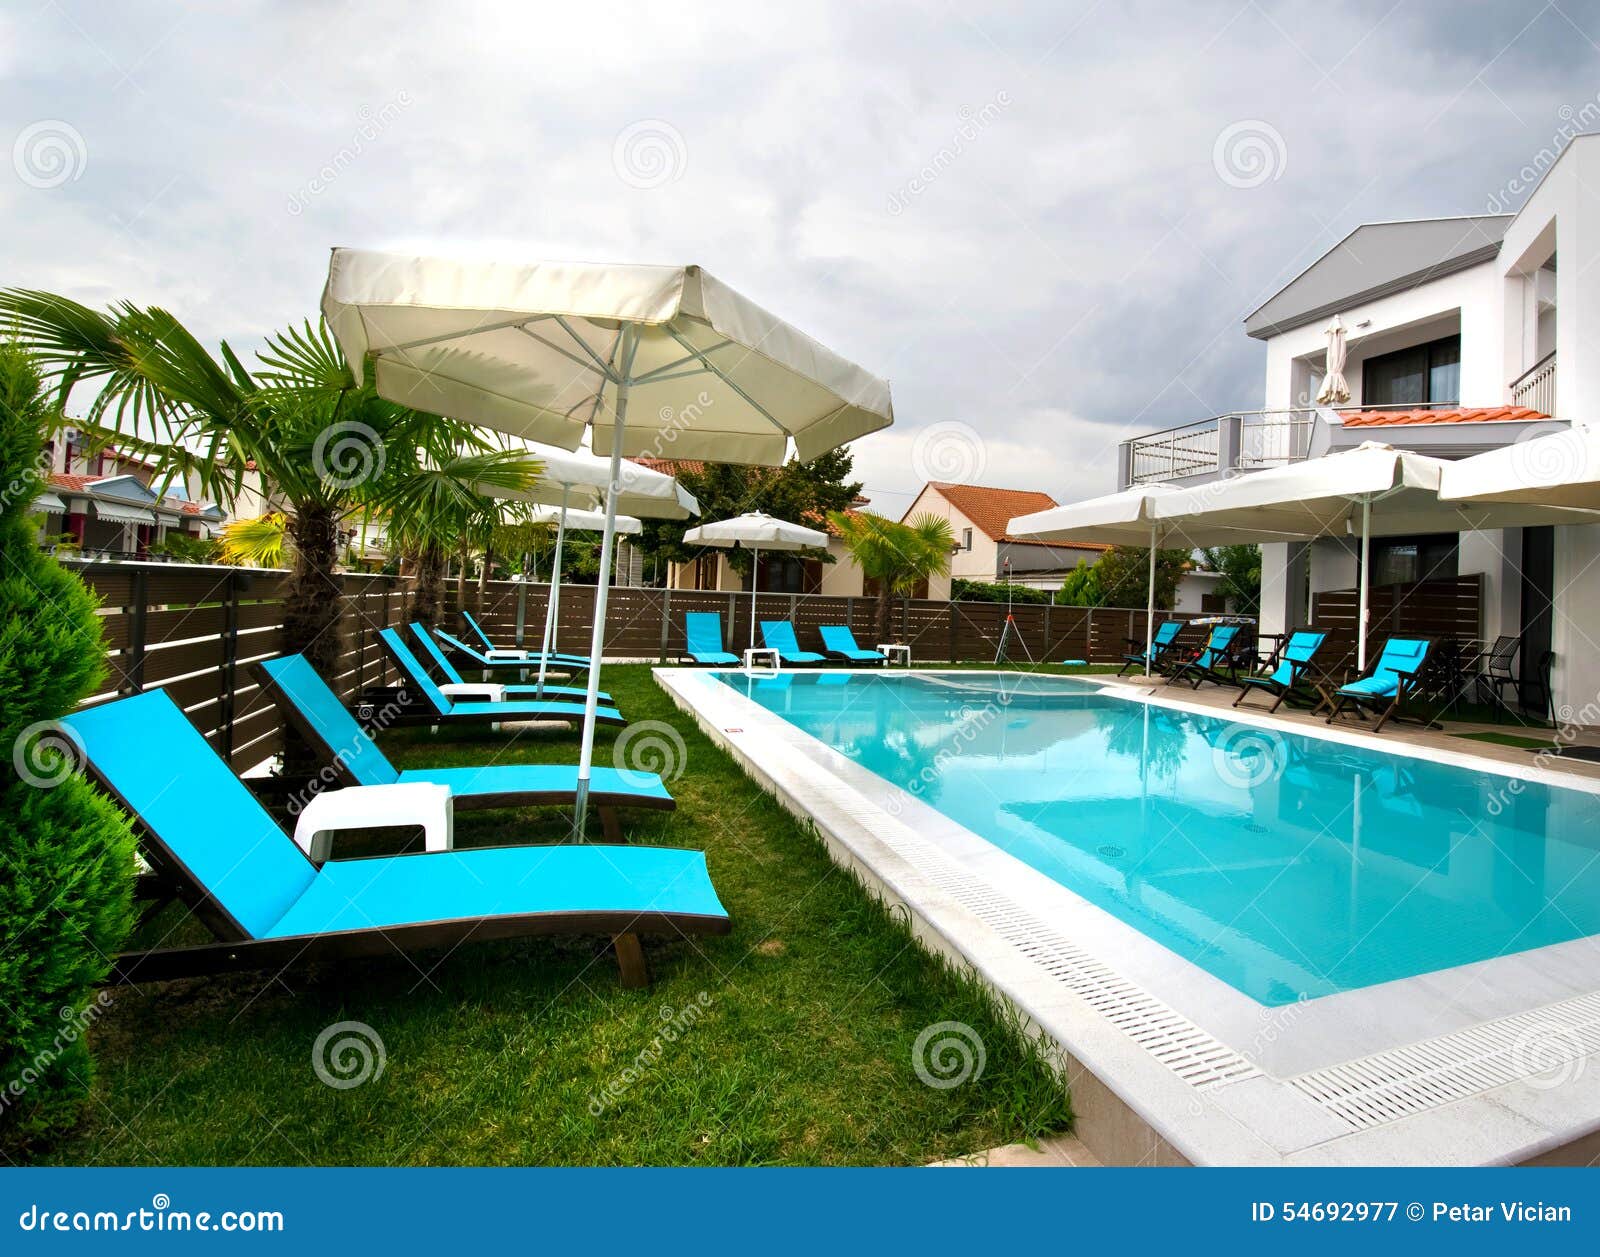 Residence iModerni iHousei Swimming Pool Stock Image Image 